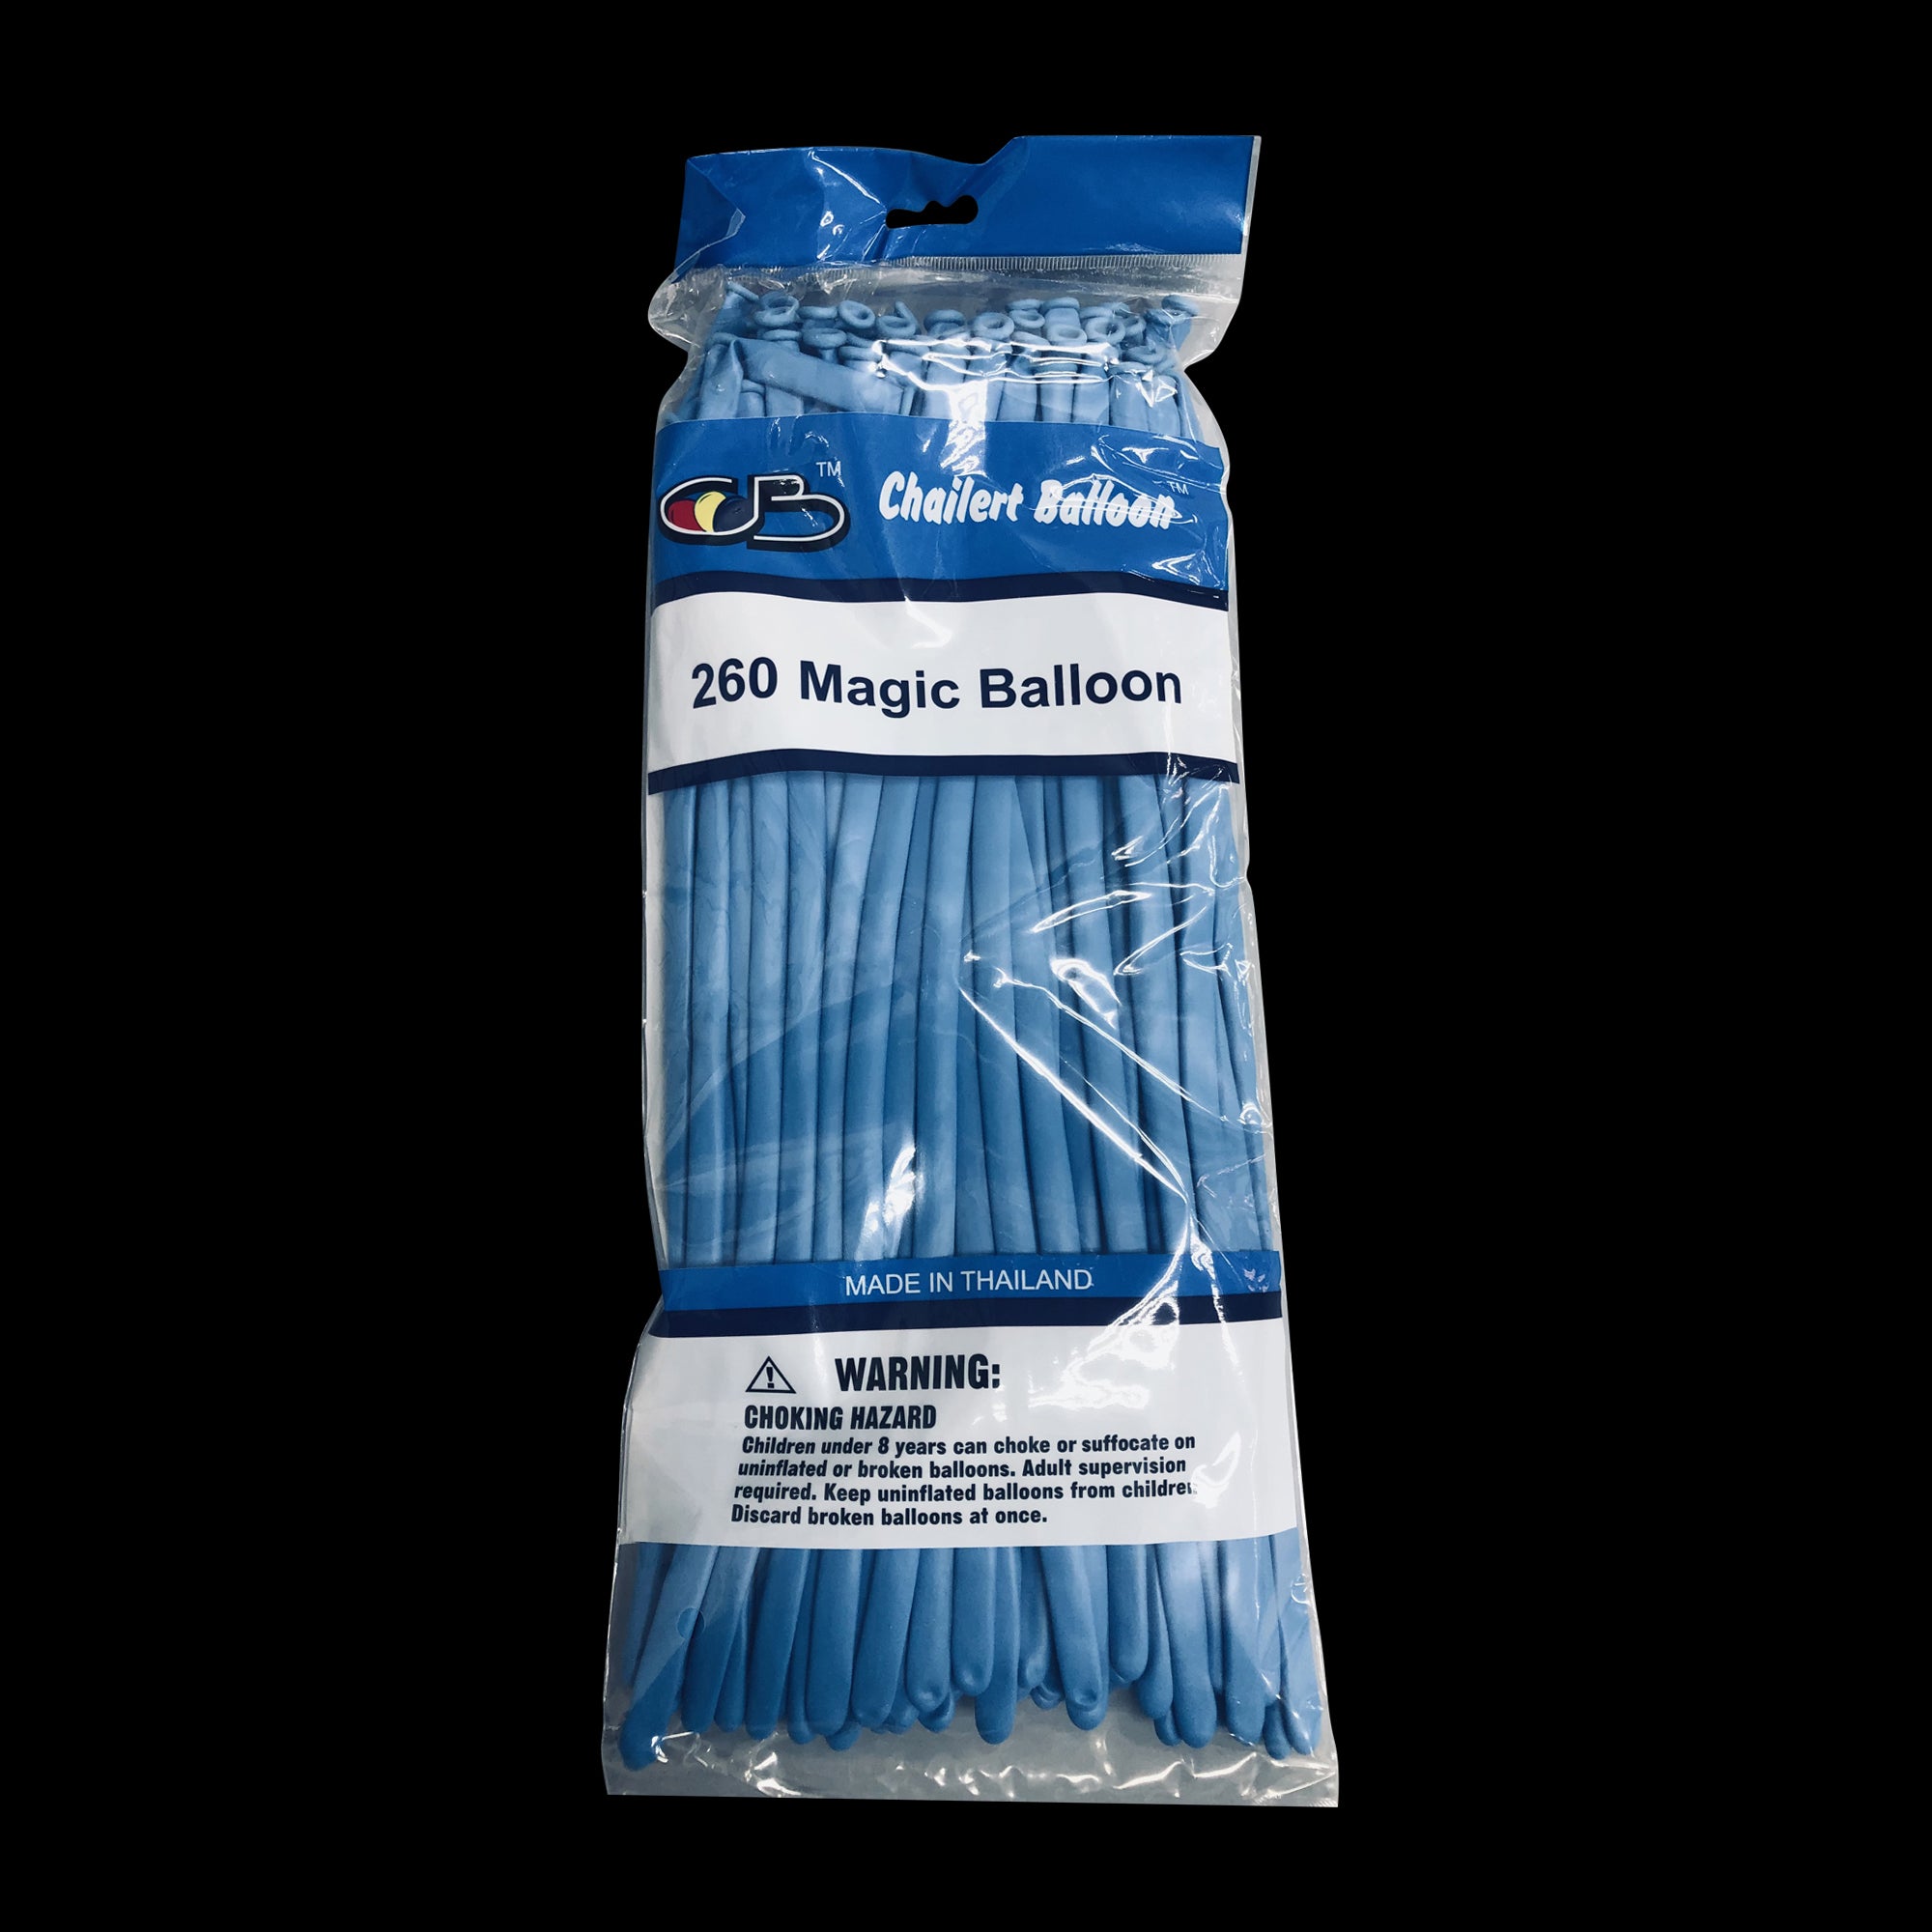 Blue twisting animal balloon style 260